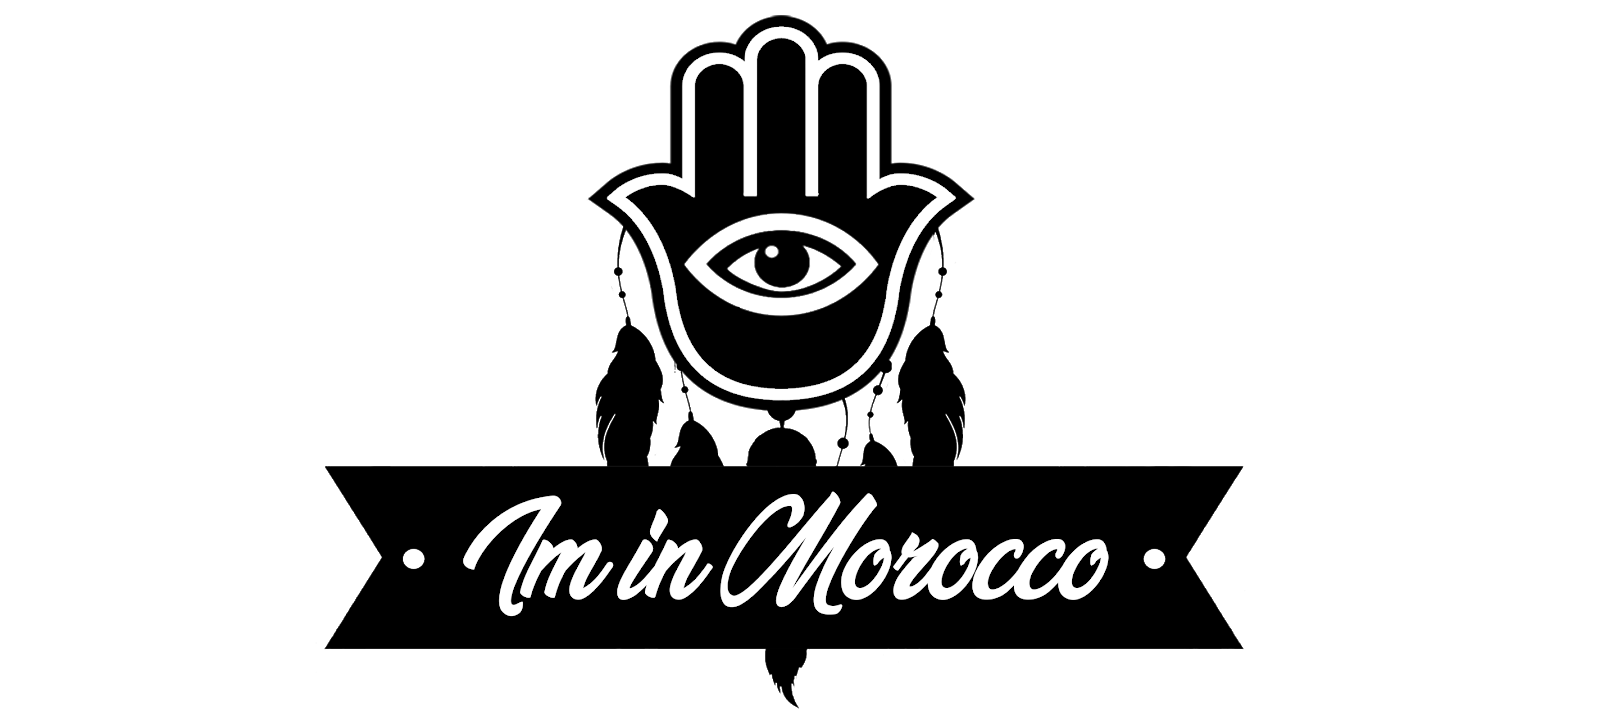 Im in Morocco